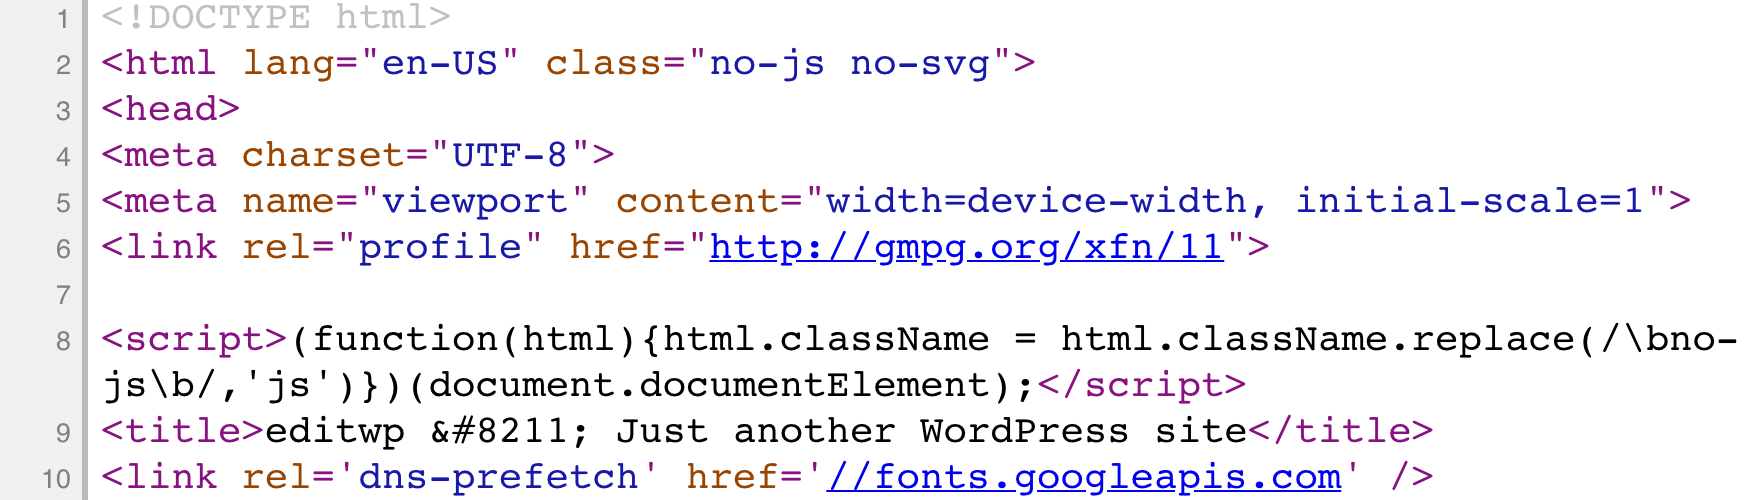 HTML Code ohne Minifizierung